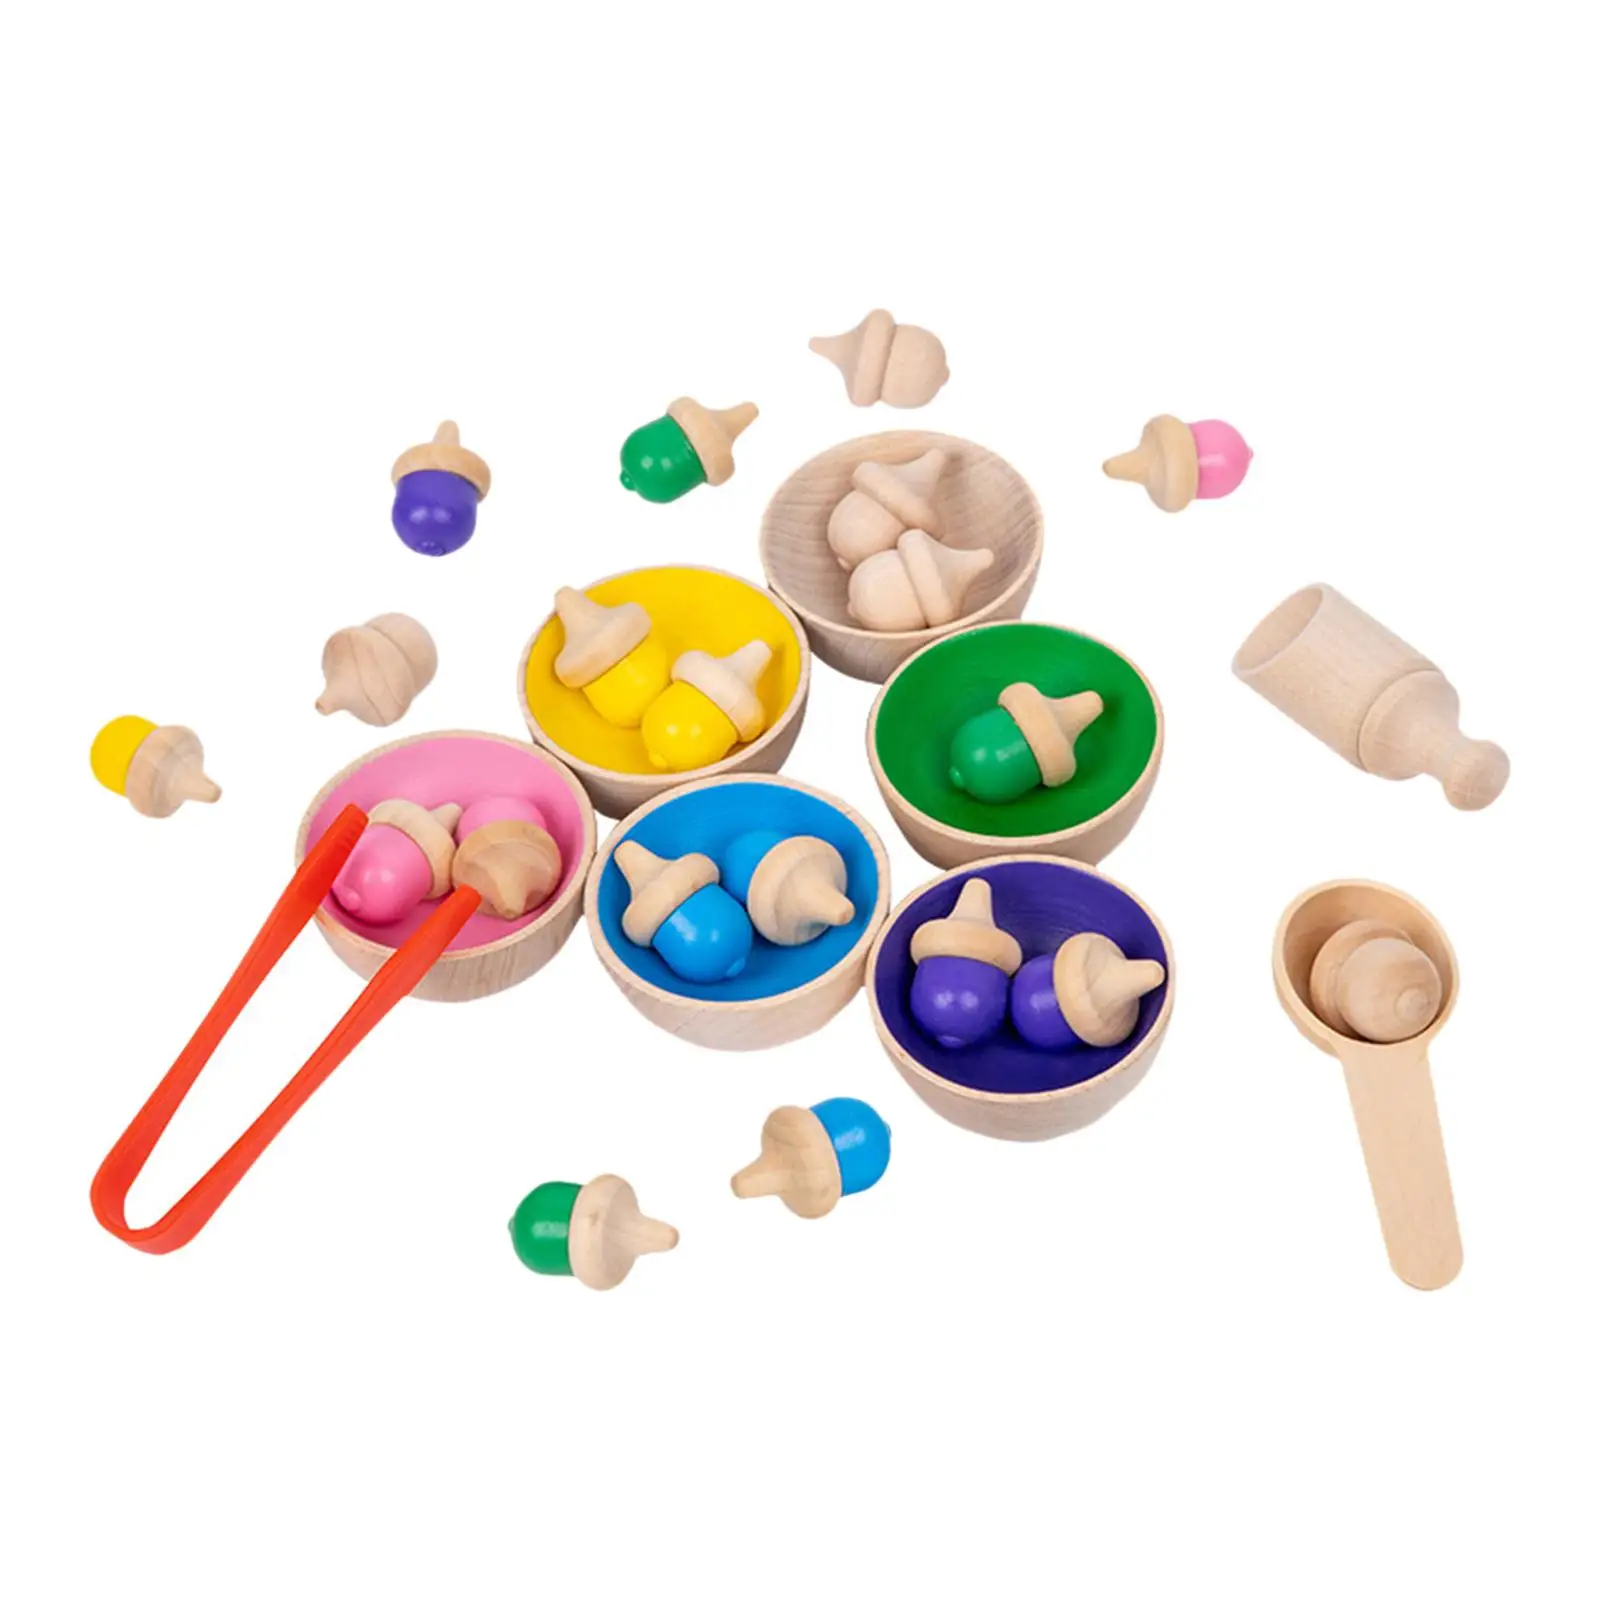 Children Balls in Cups Montessori Toy Preschool Learning Toy Sorter Game